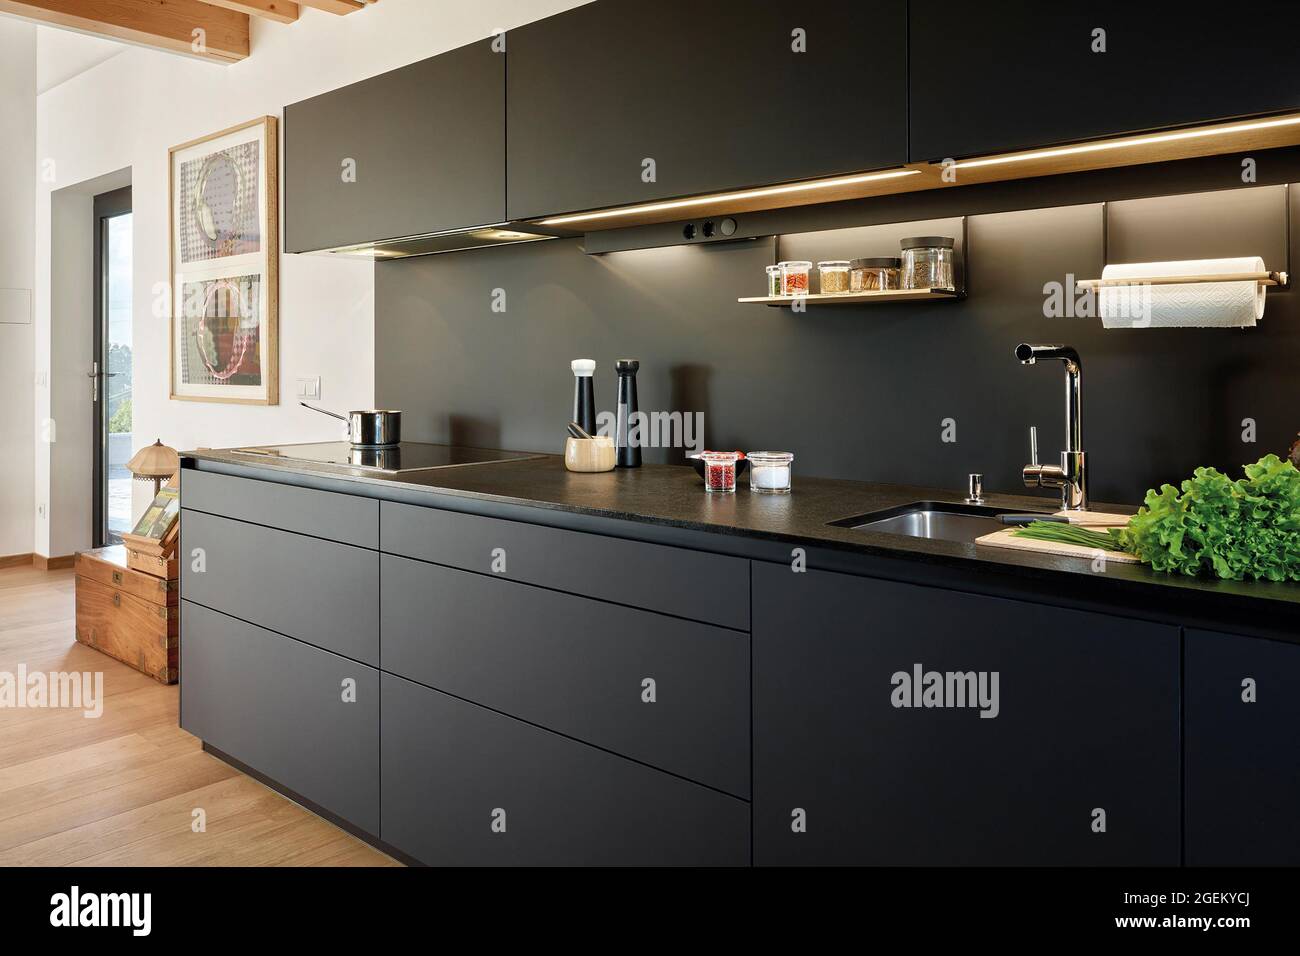 Modern luxury kitchen interior design in minimal style Stock Photo ...